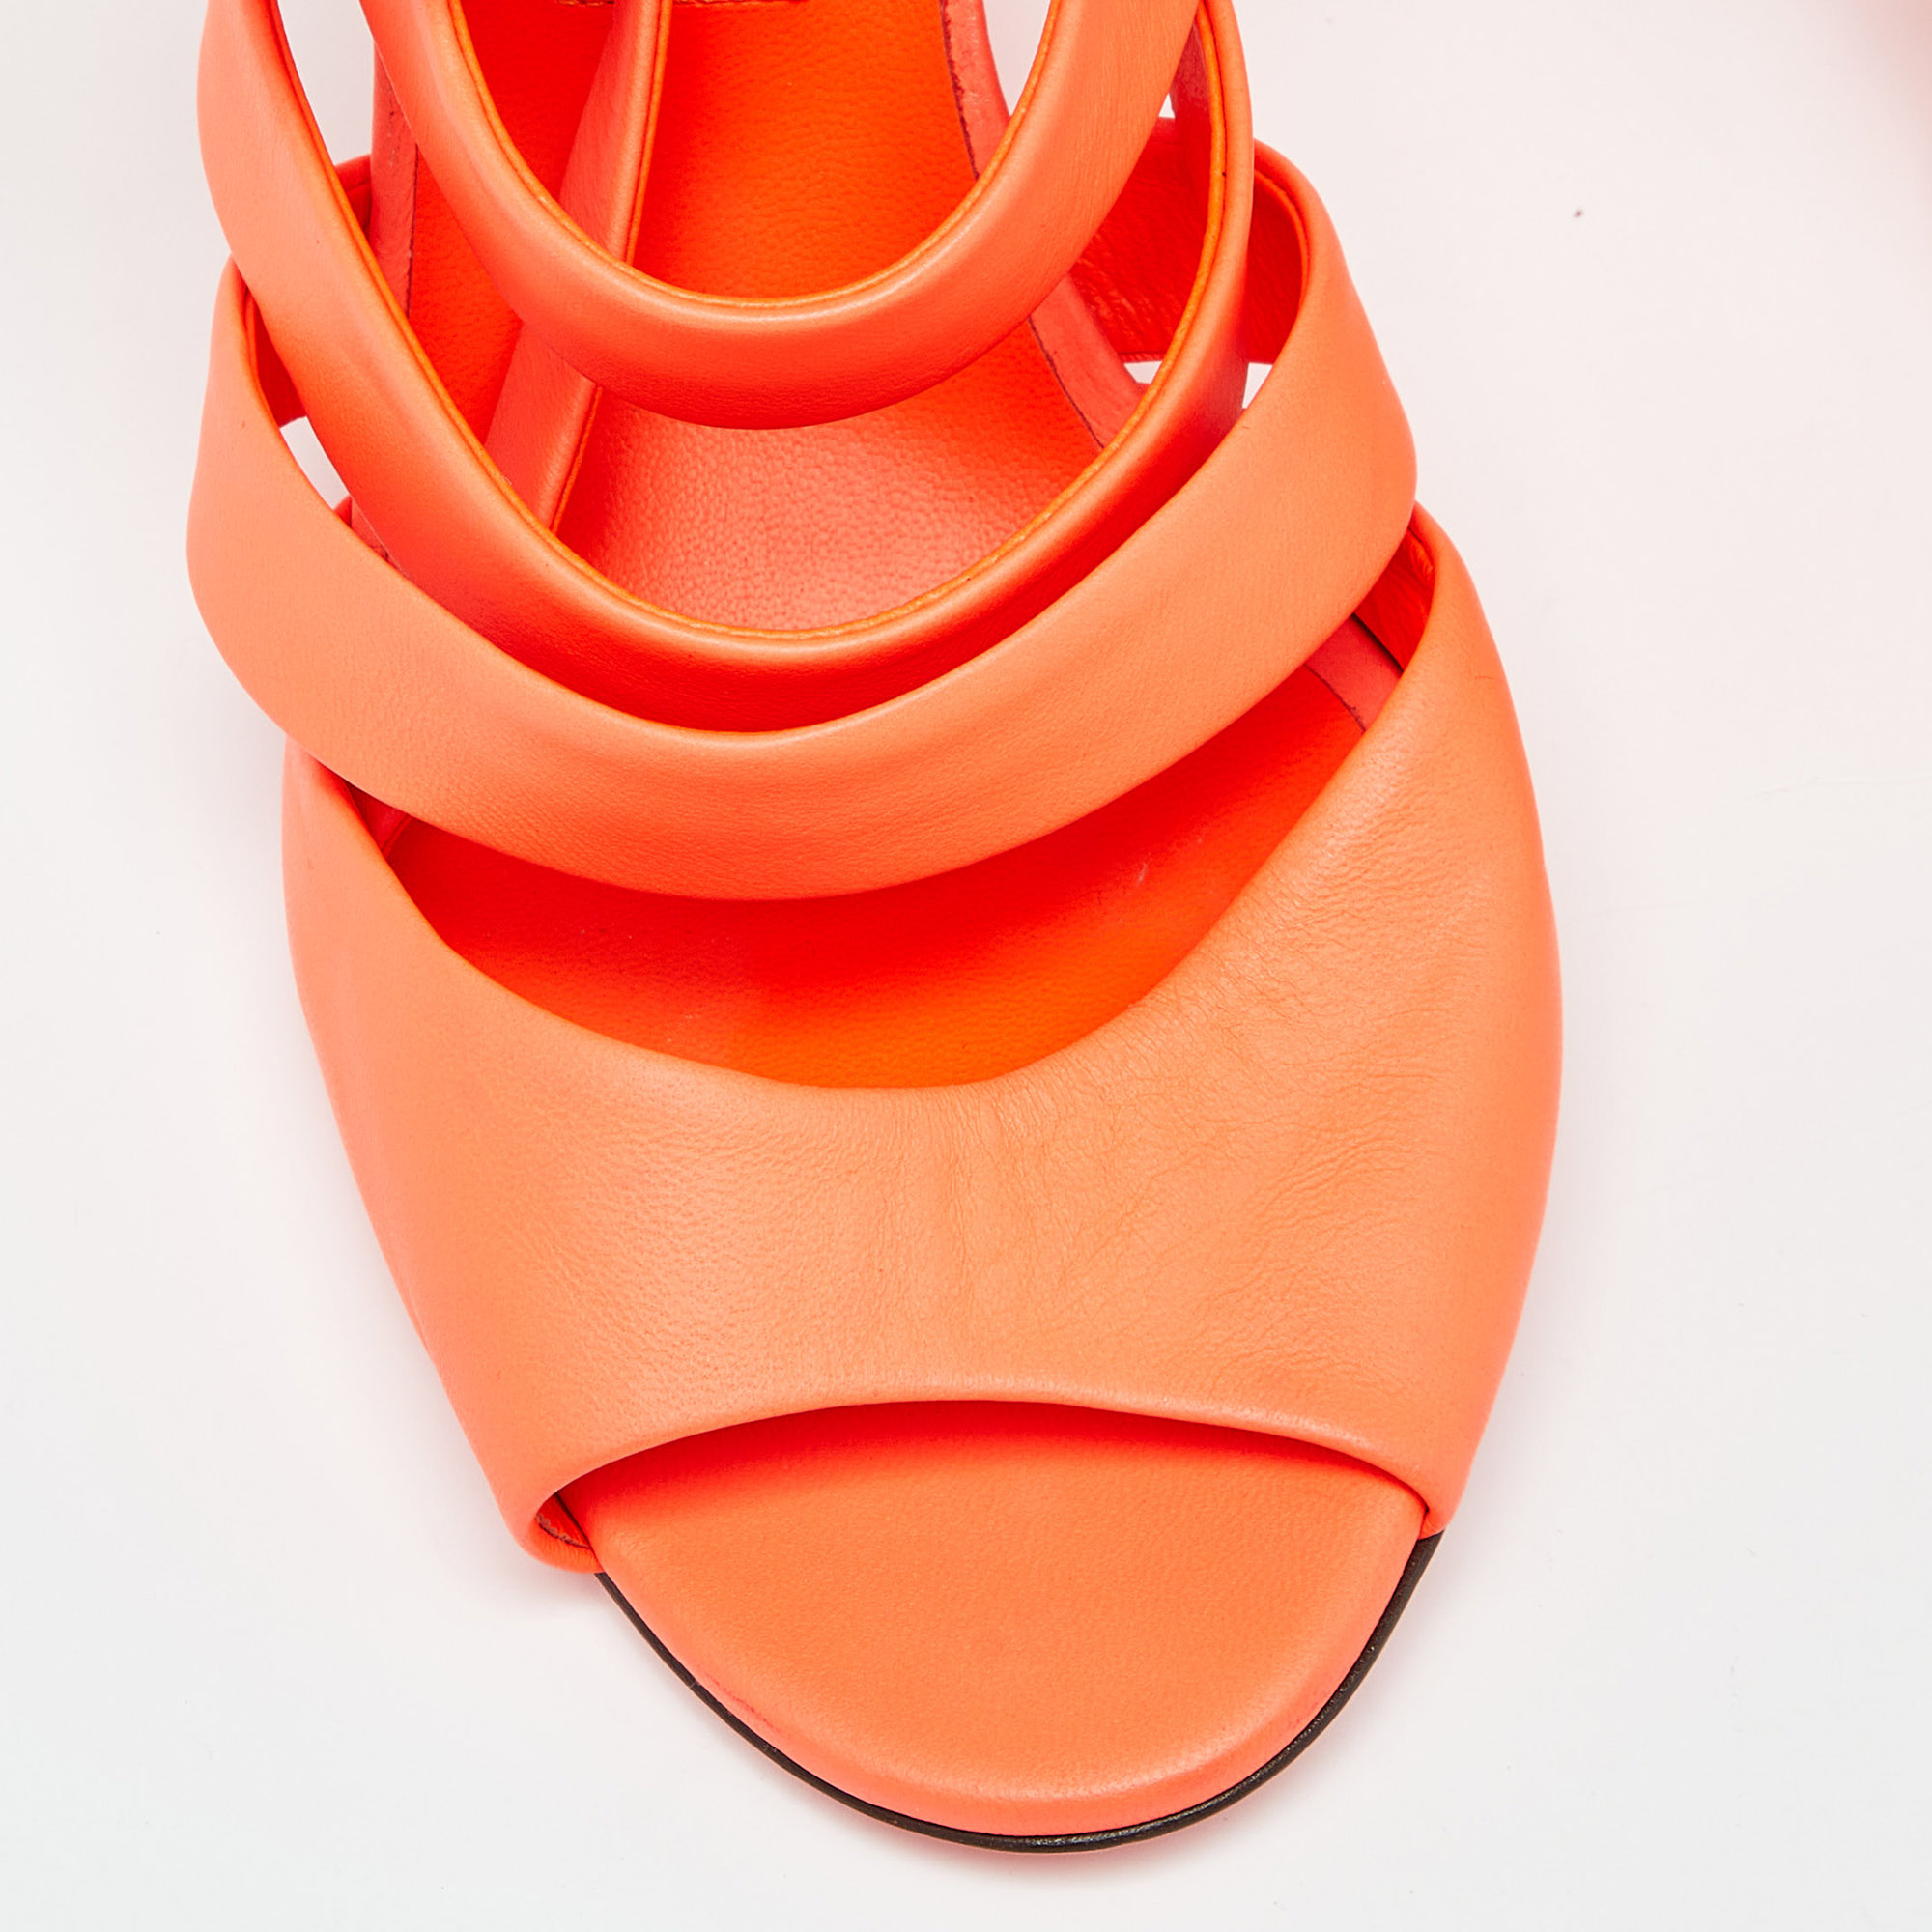 Jimmy Choo Neon Orange Dame Sandals Size 39